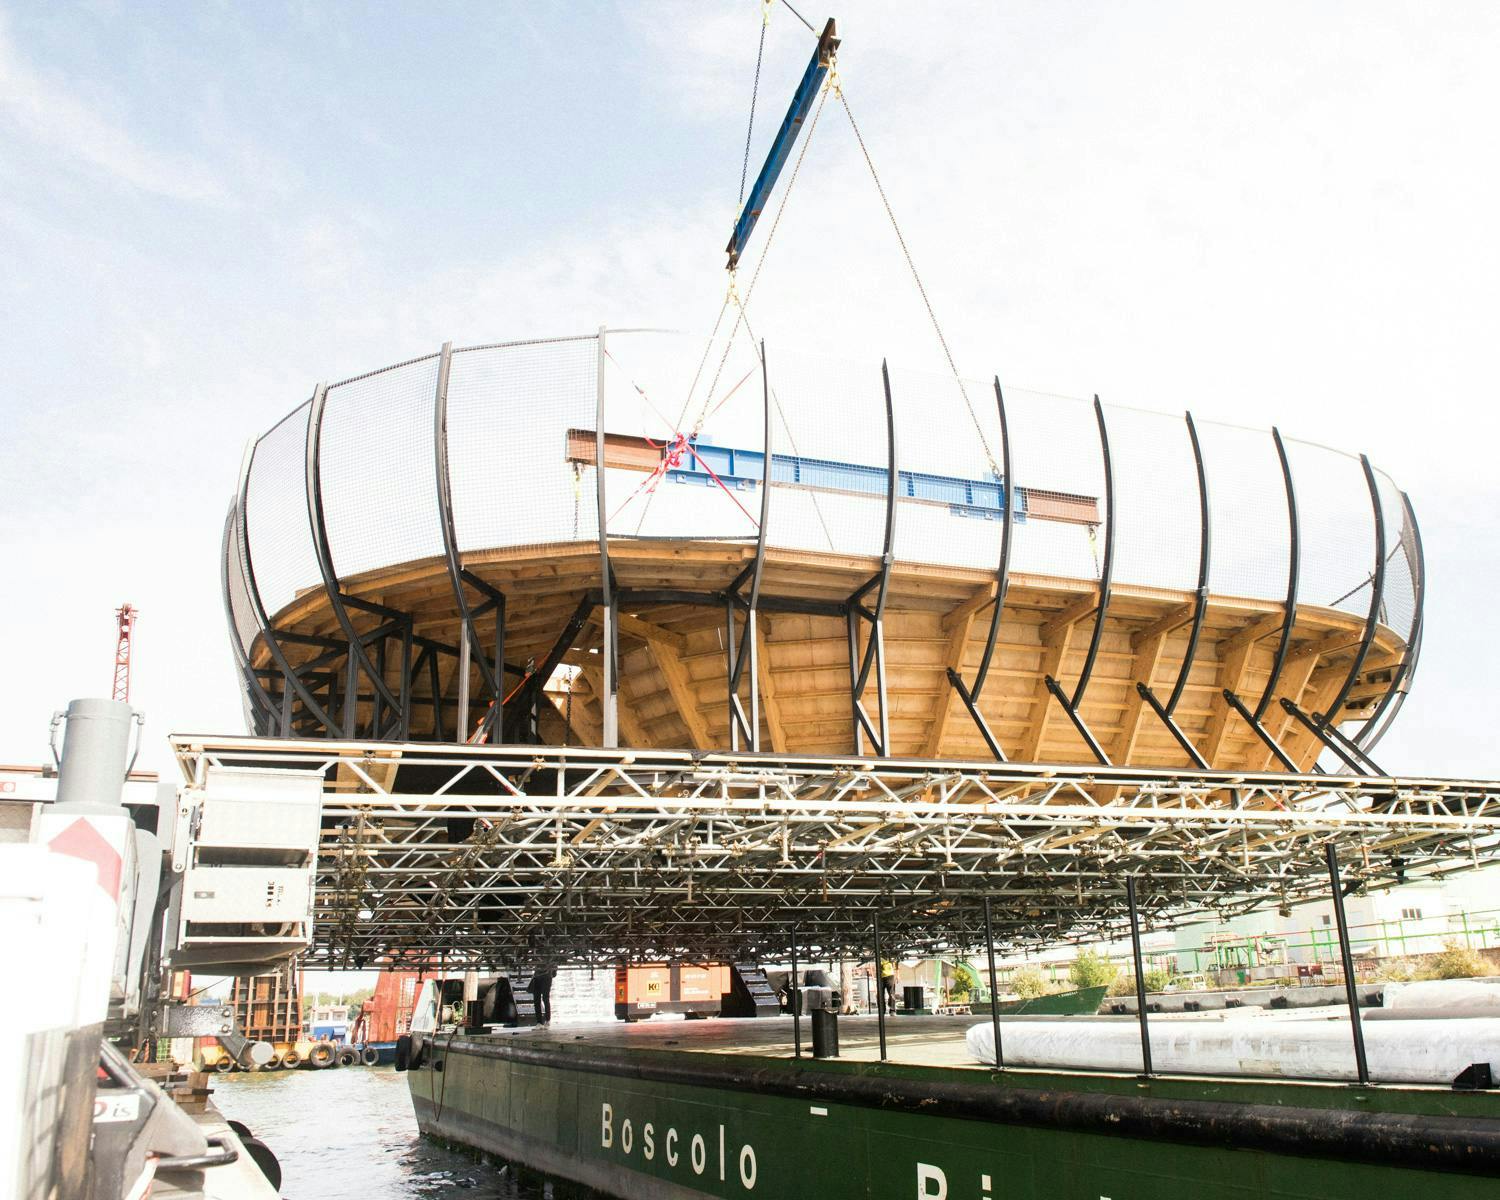 boat transportation vehicle building stadium arena